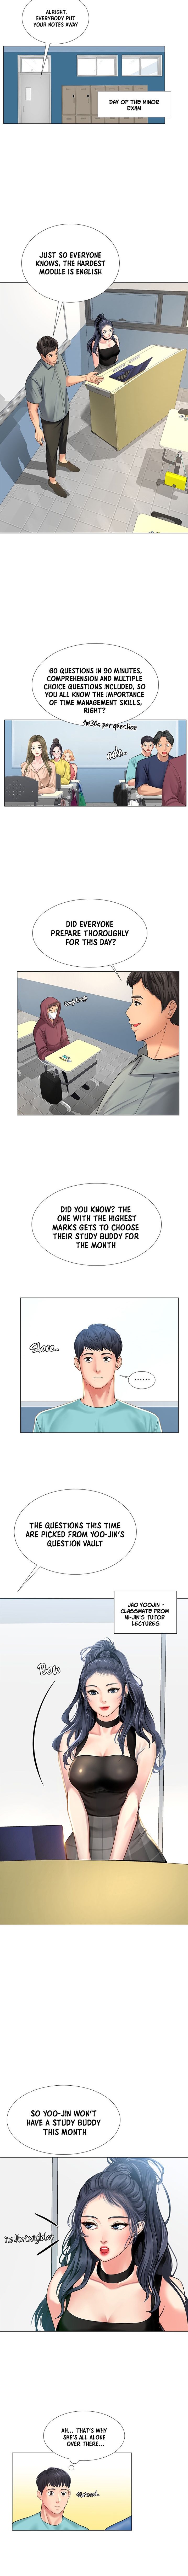 Should I Study at Noryangjin? - Chapter 17 Page 8